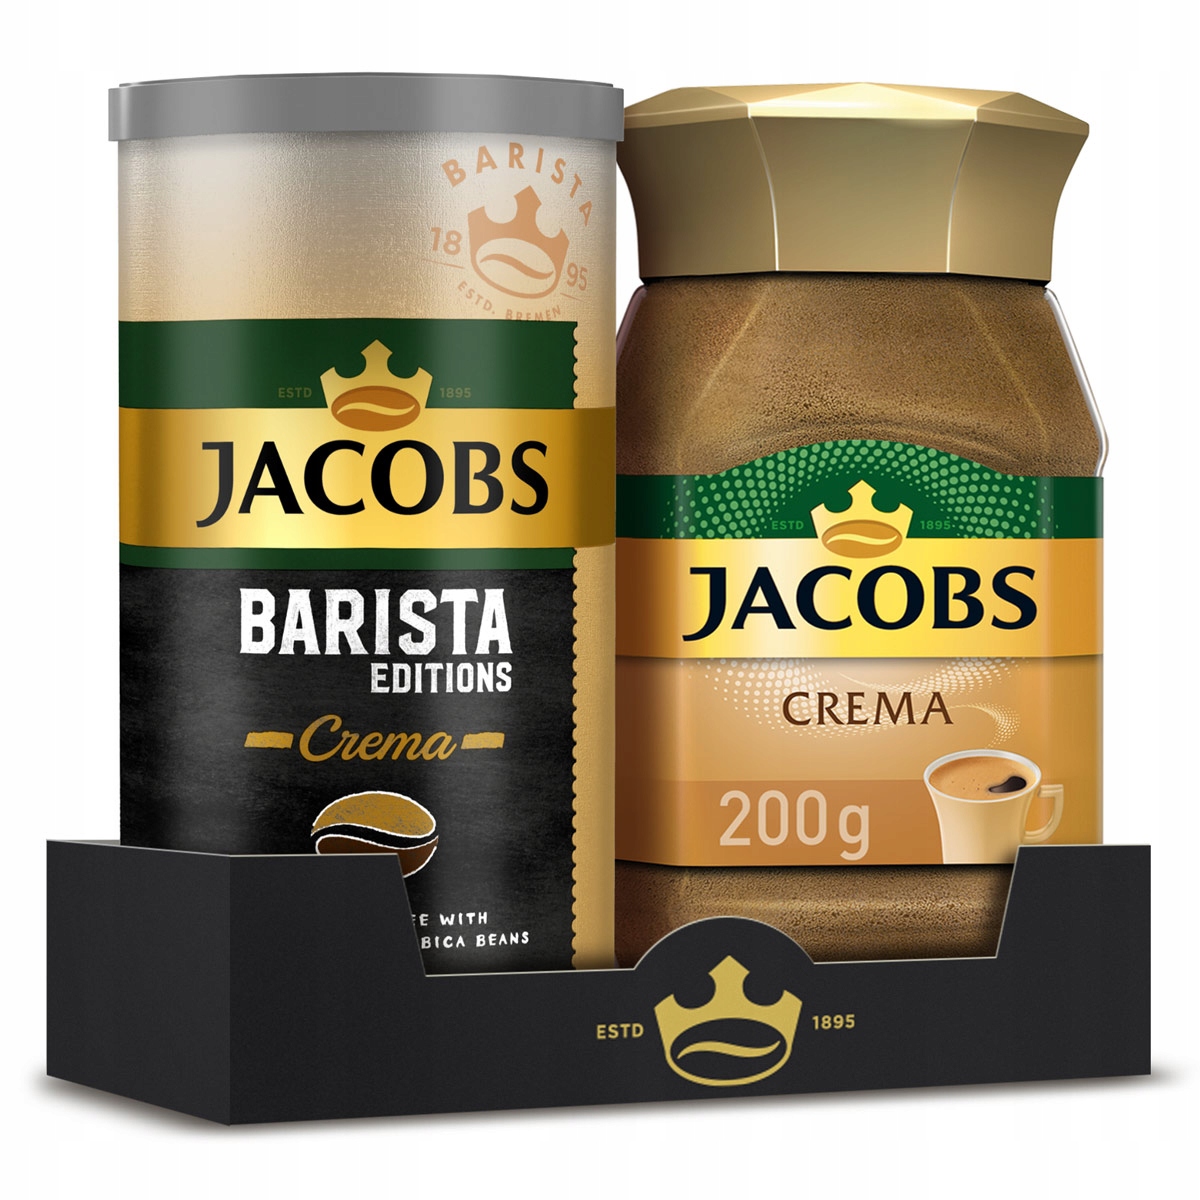 Кофе якобс бариста. Jacobs crema. Jacobs Barista. Кофе в банке Якобс бариста. «Lusso», кофе Gold, растворимый, 2 г.